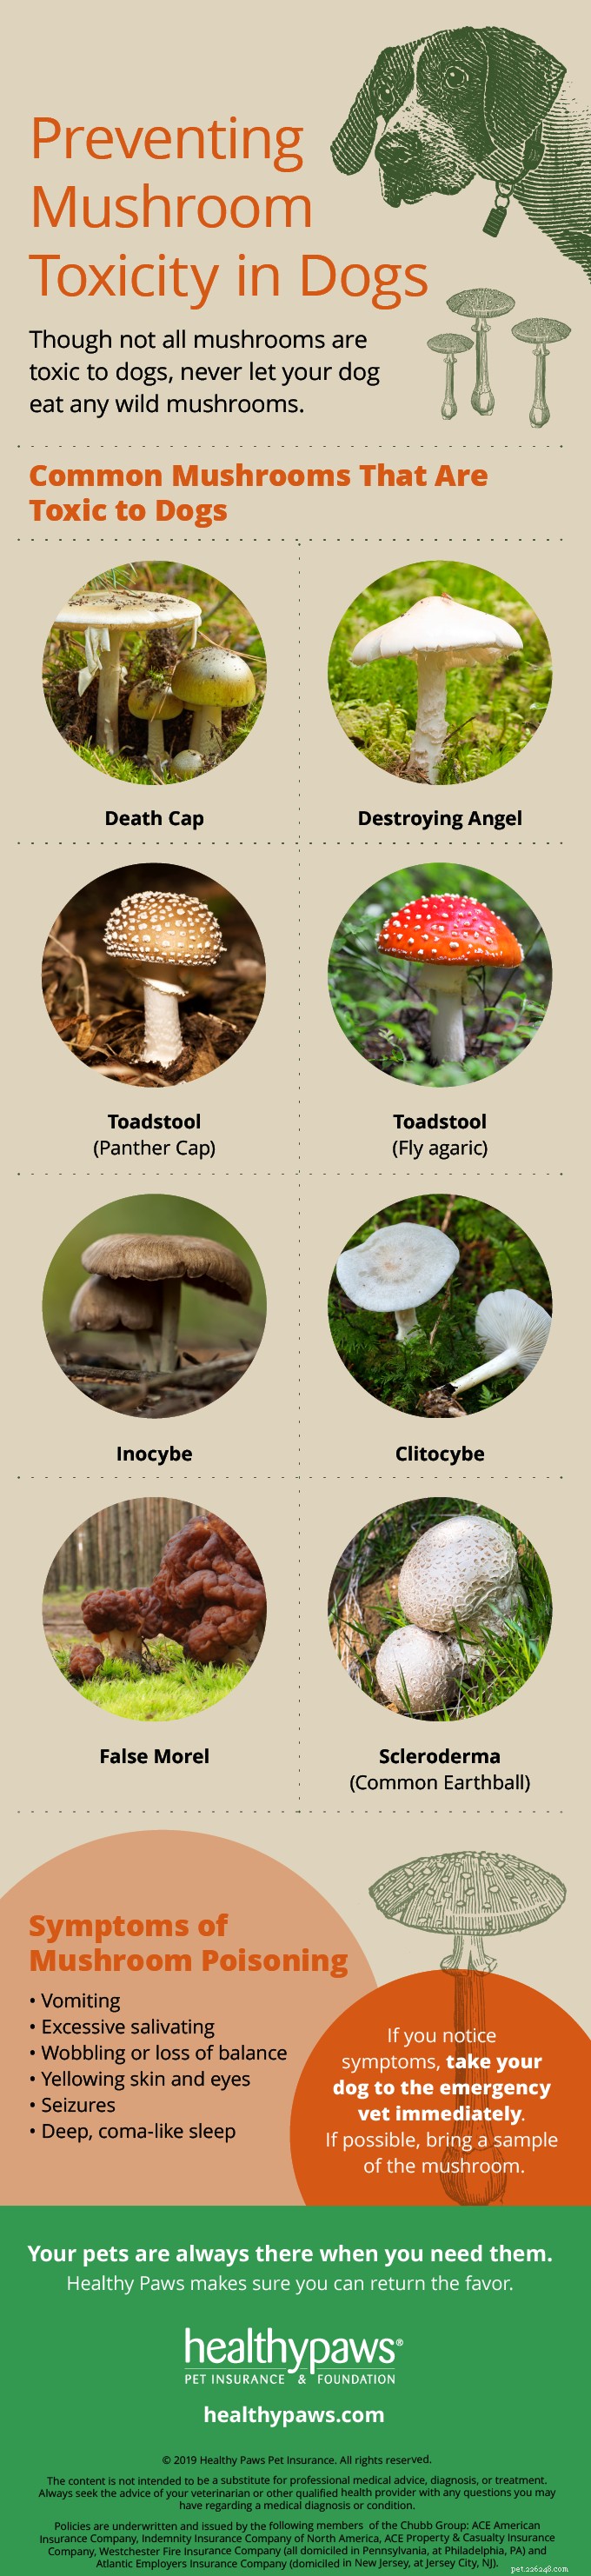 Infographic:Preventing Mushroom Toxicity